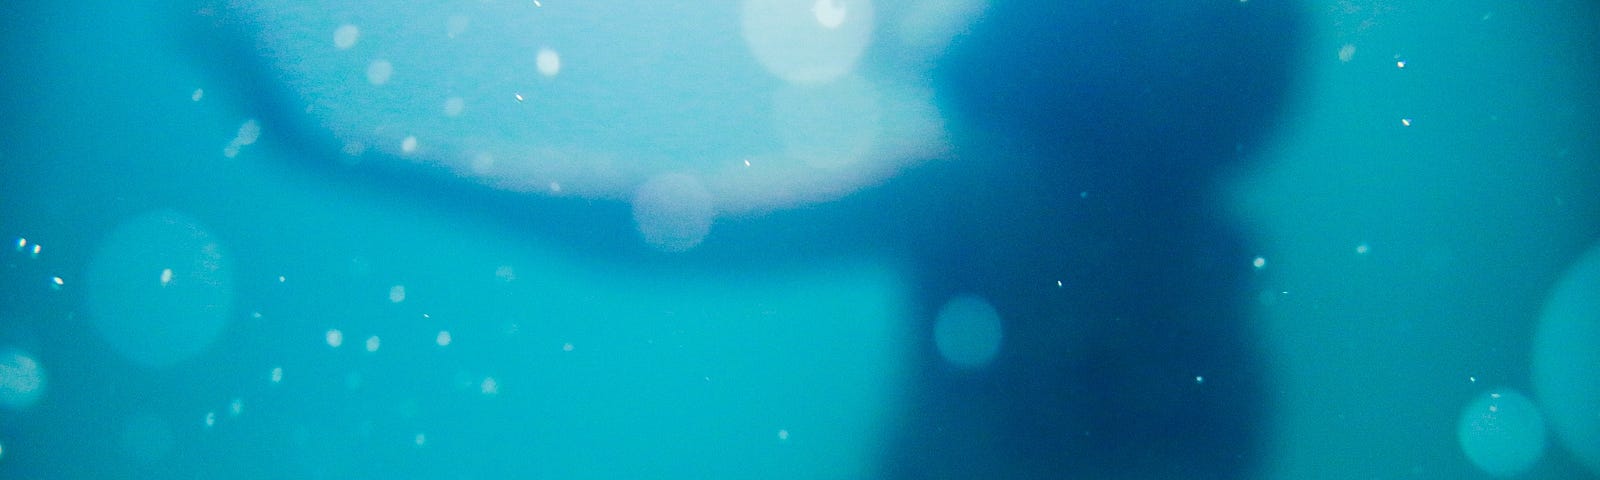 Blurry female figure swimming in deep water